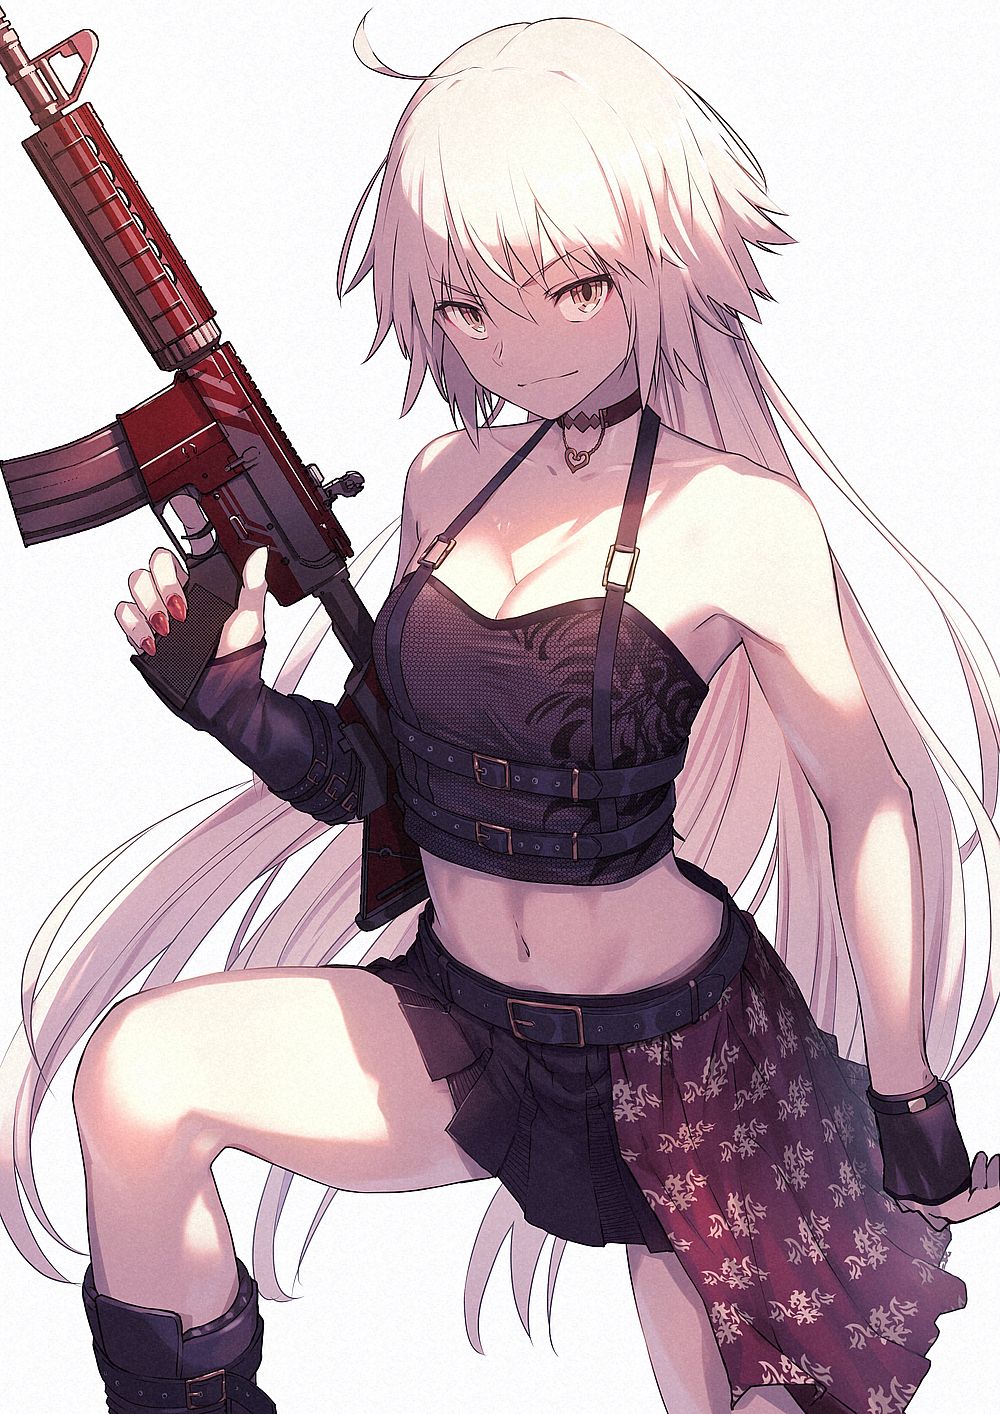 Hot anime girl Jeanne Alter in crop top & miniskirt (with assault rifle): Fate series (Artist: Nakanishi tatsuya)